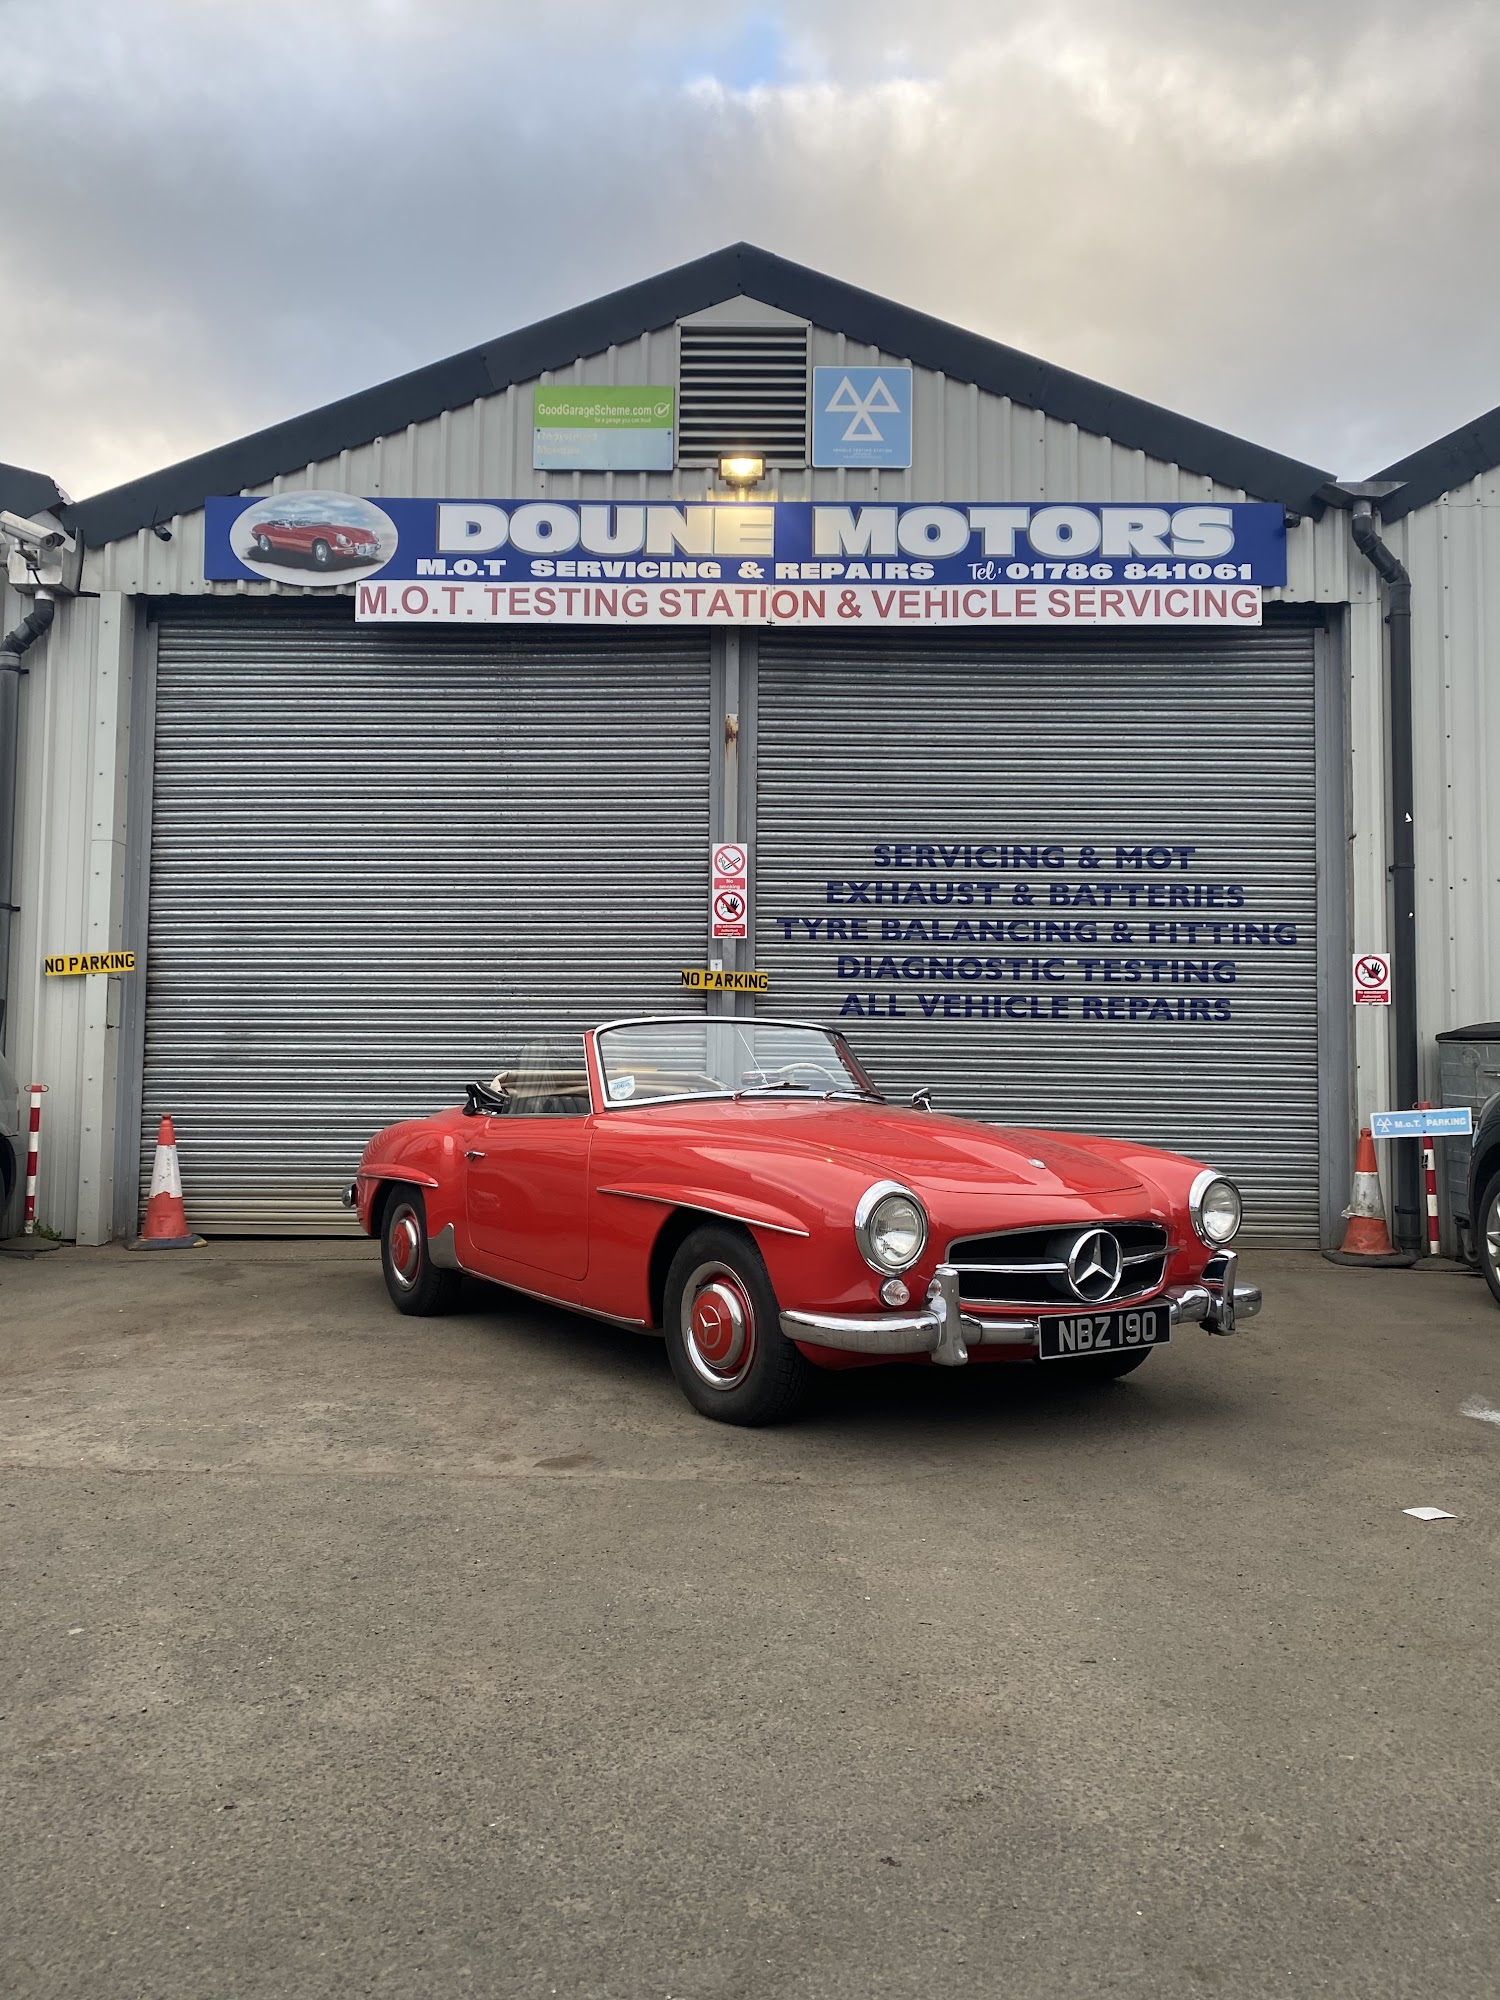 Doune Motors Ltd